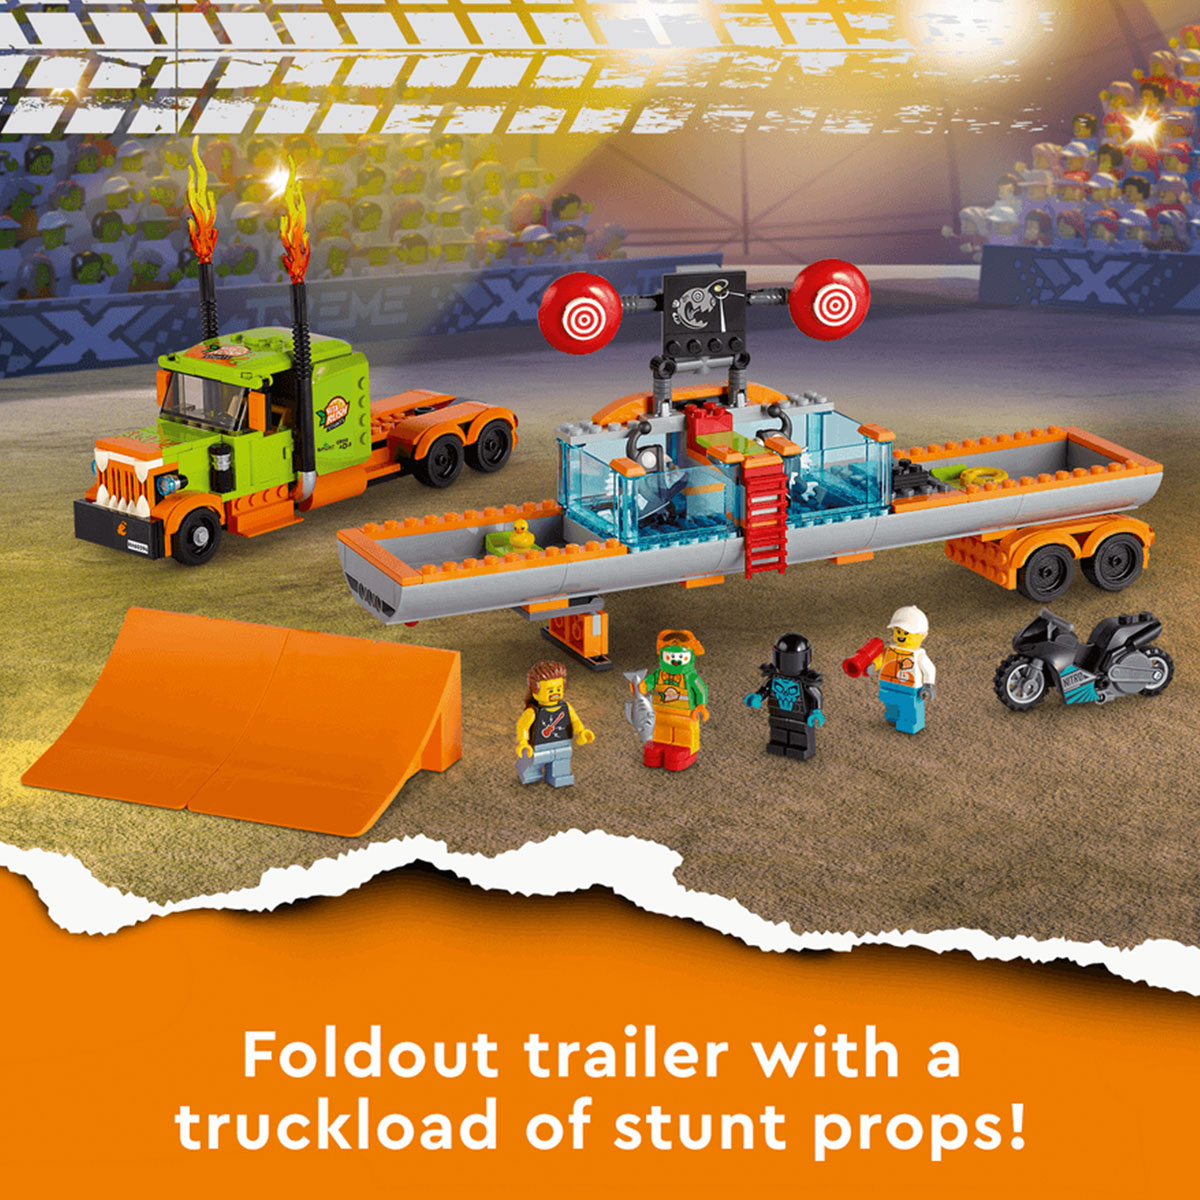 LEGO - City Stunt Stunt Show Truck 60294